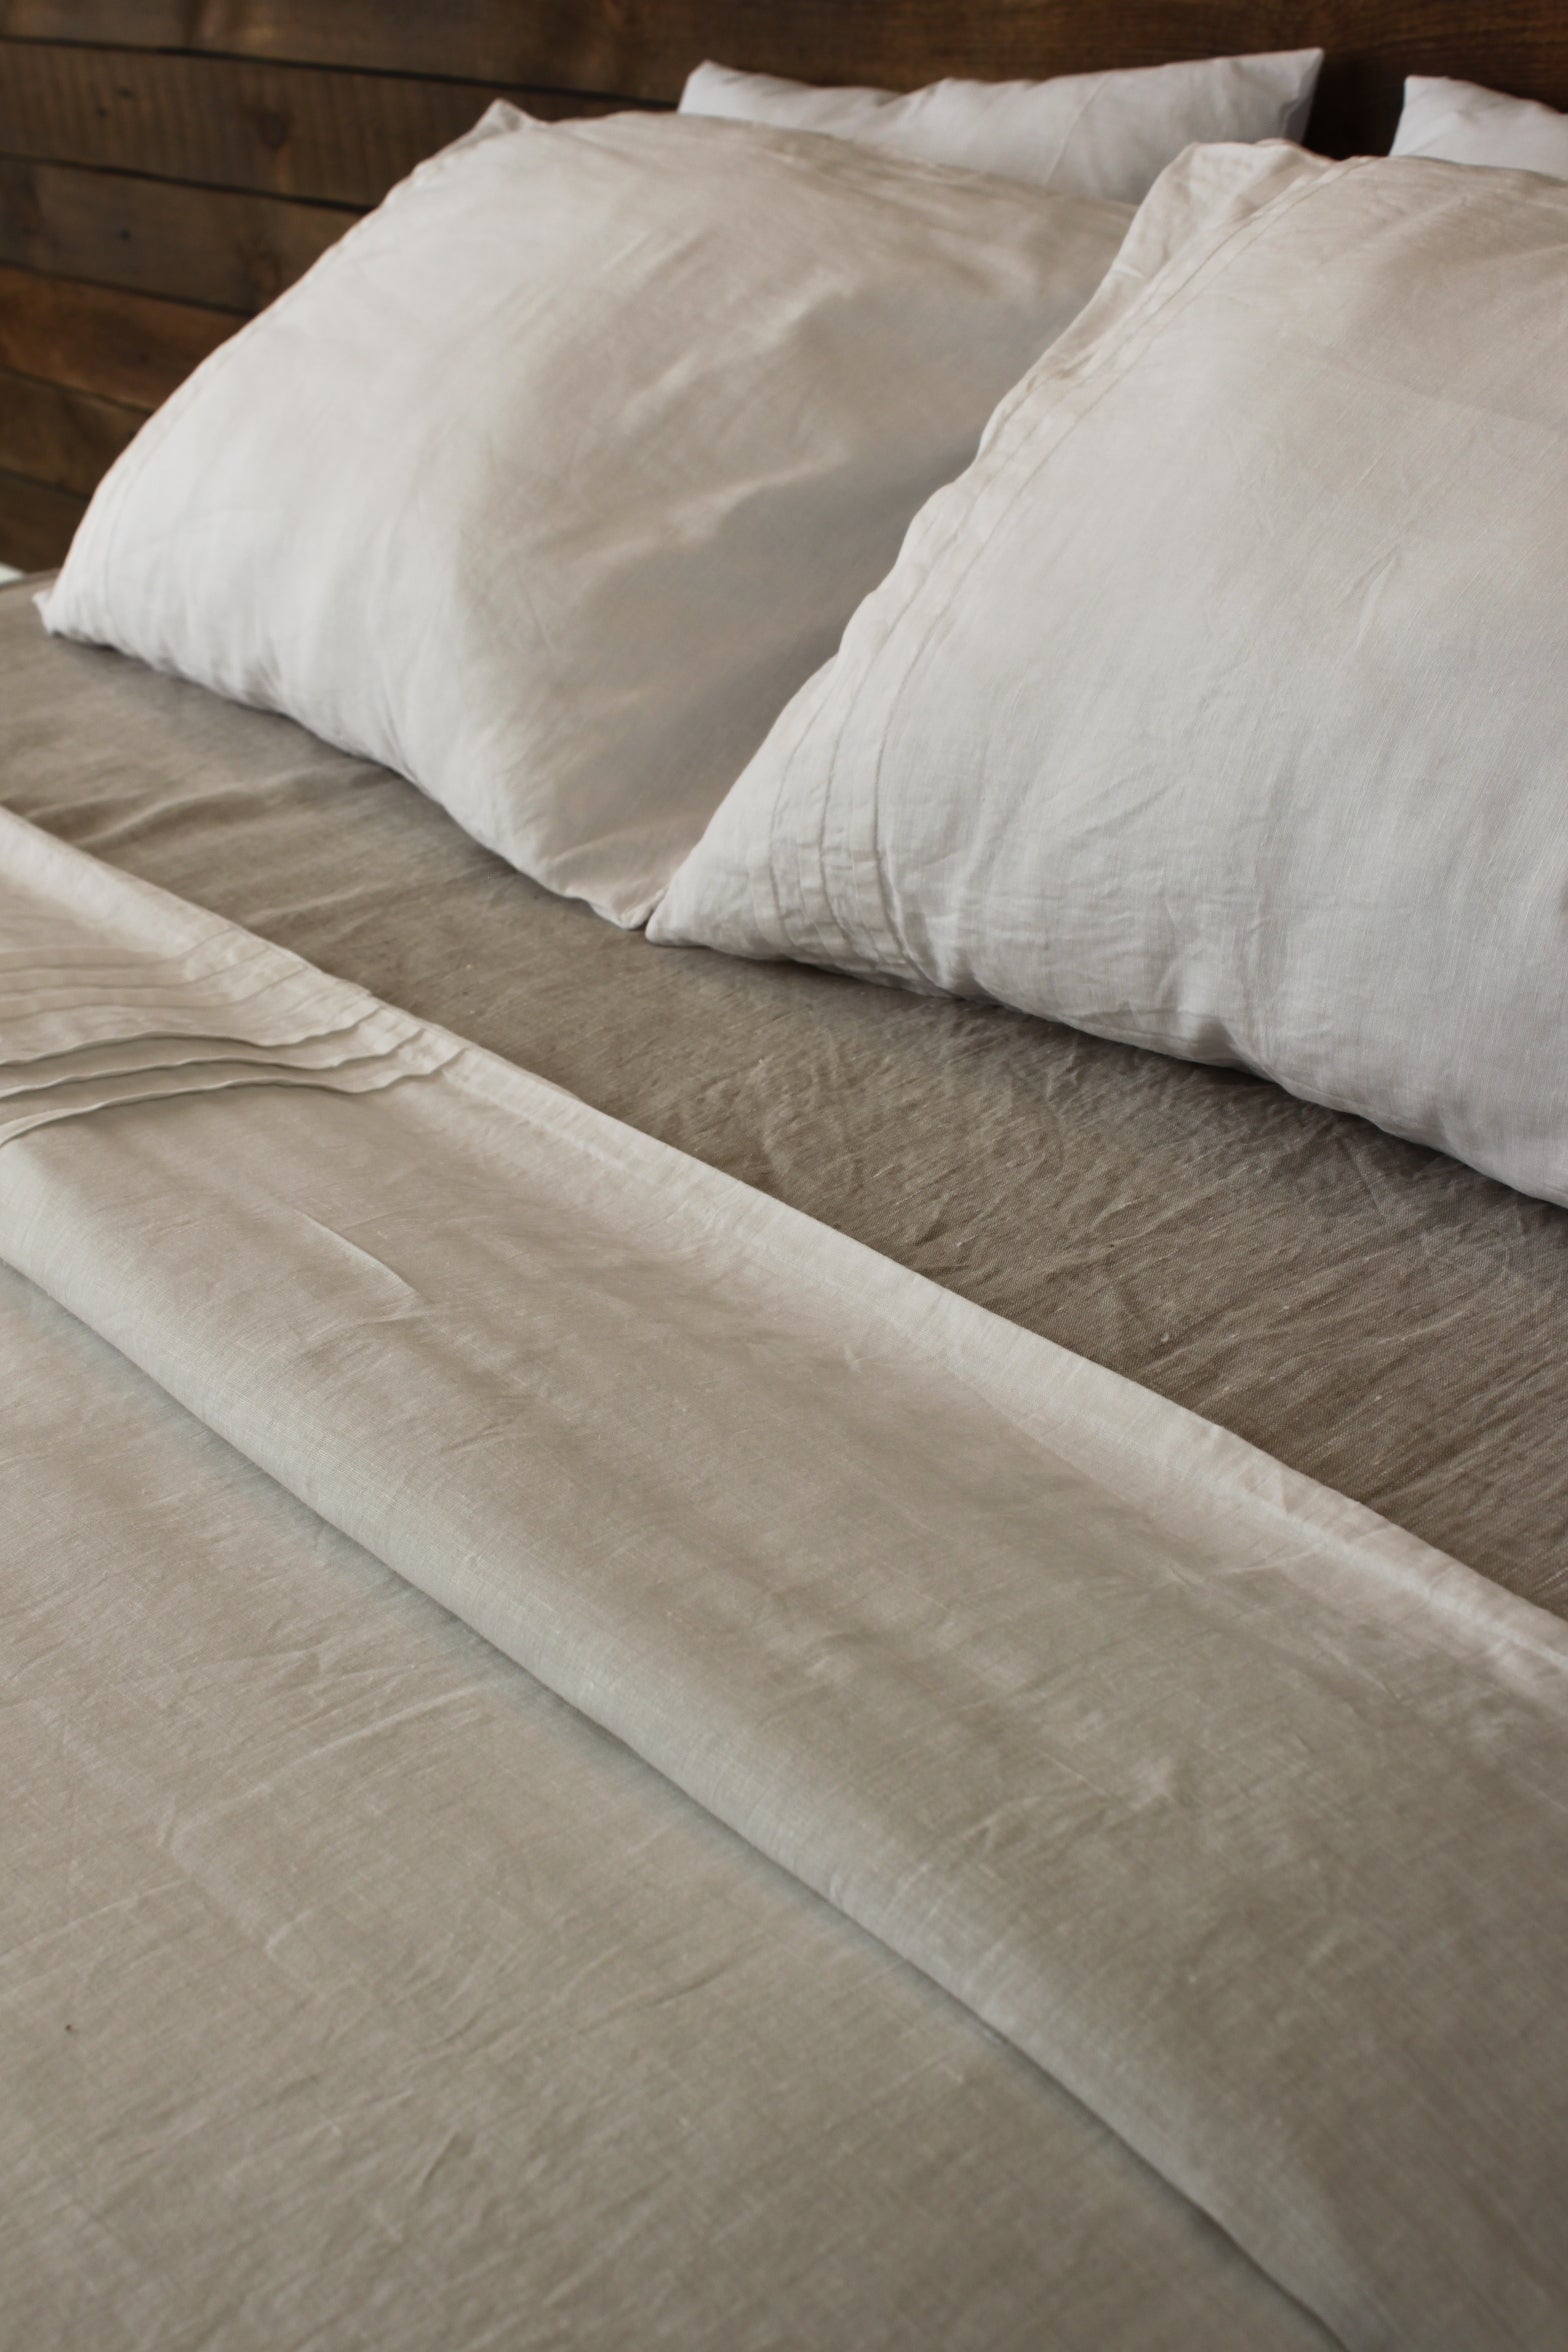 Linen Bedding Set with Pleats